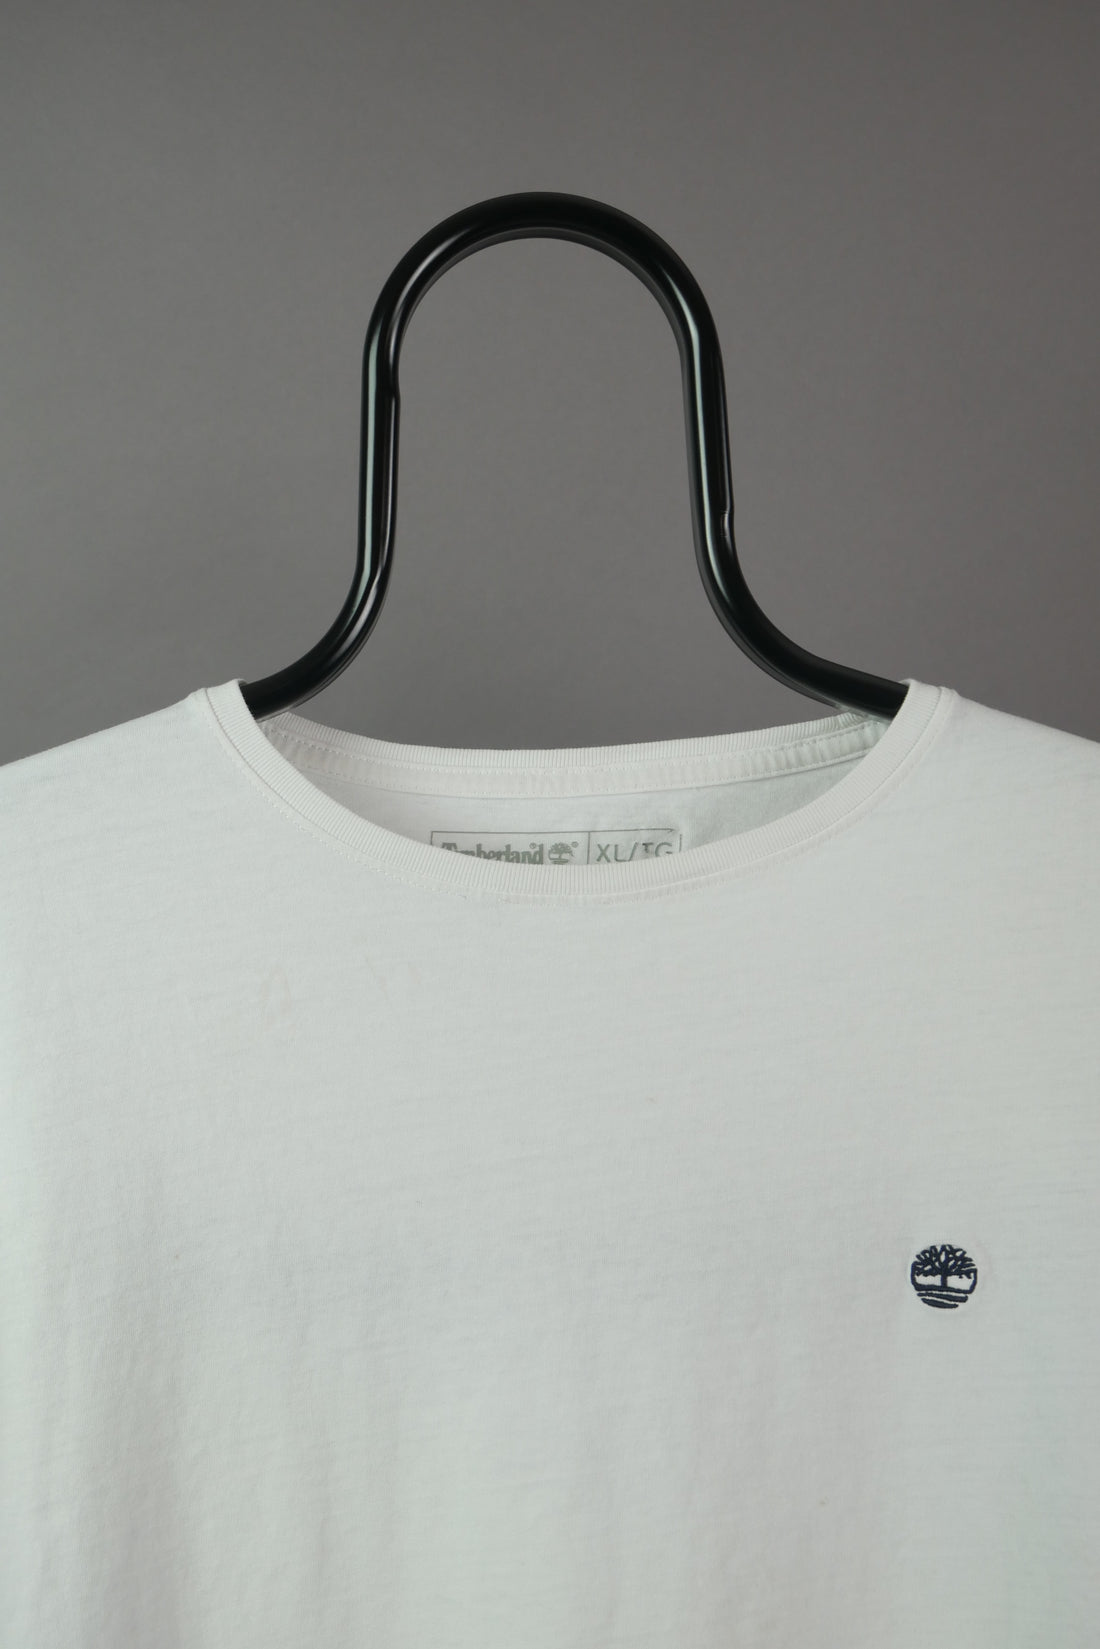 The Timberland T-Shirt (XL)